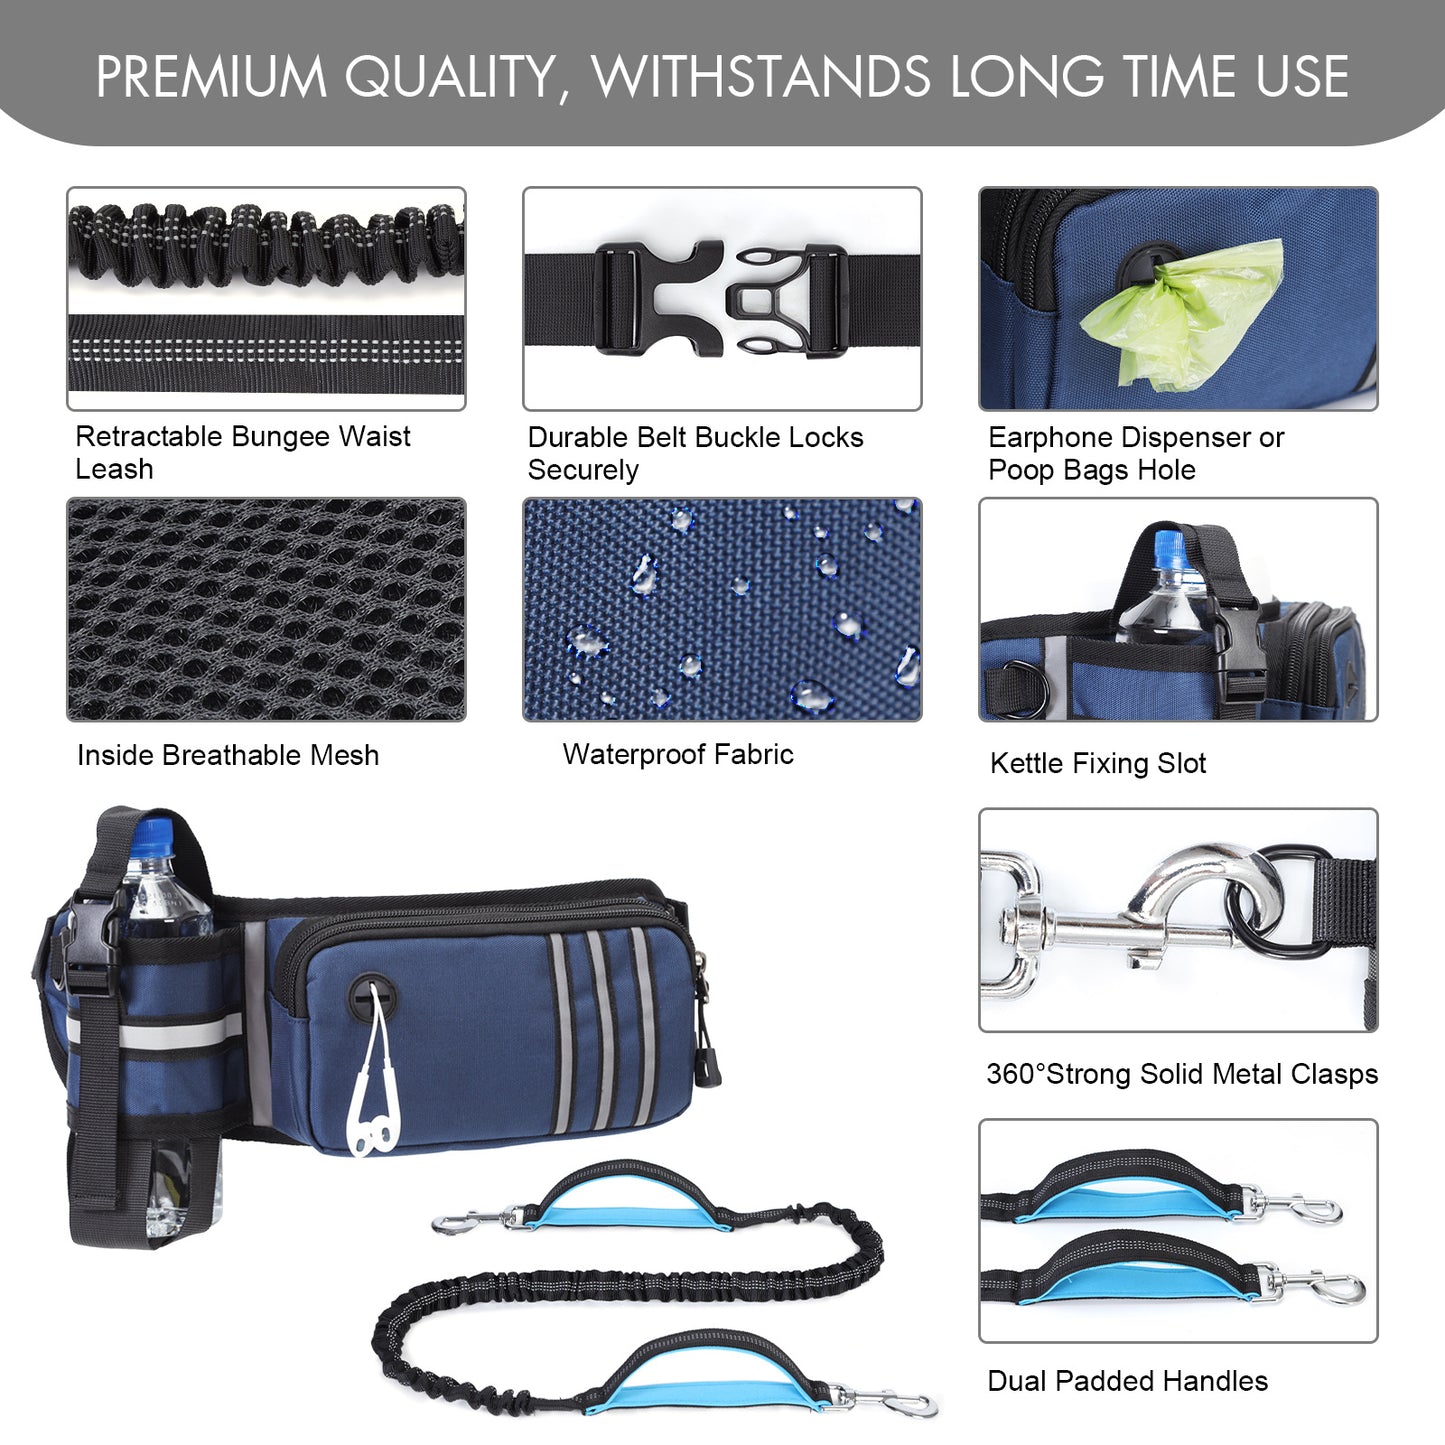 Hands-Free Waist Belt Retractable Bungee Leash with Zipper Pouch